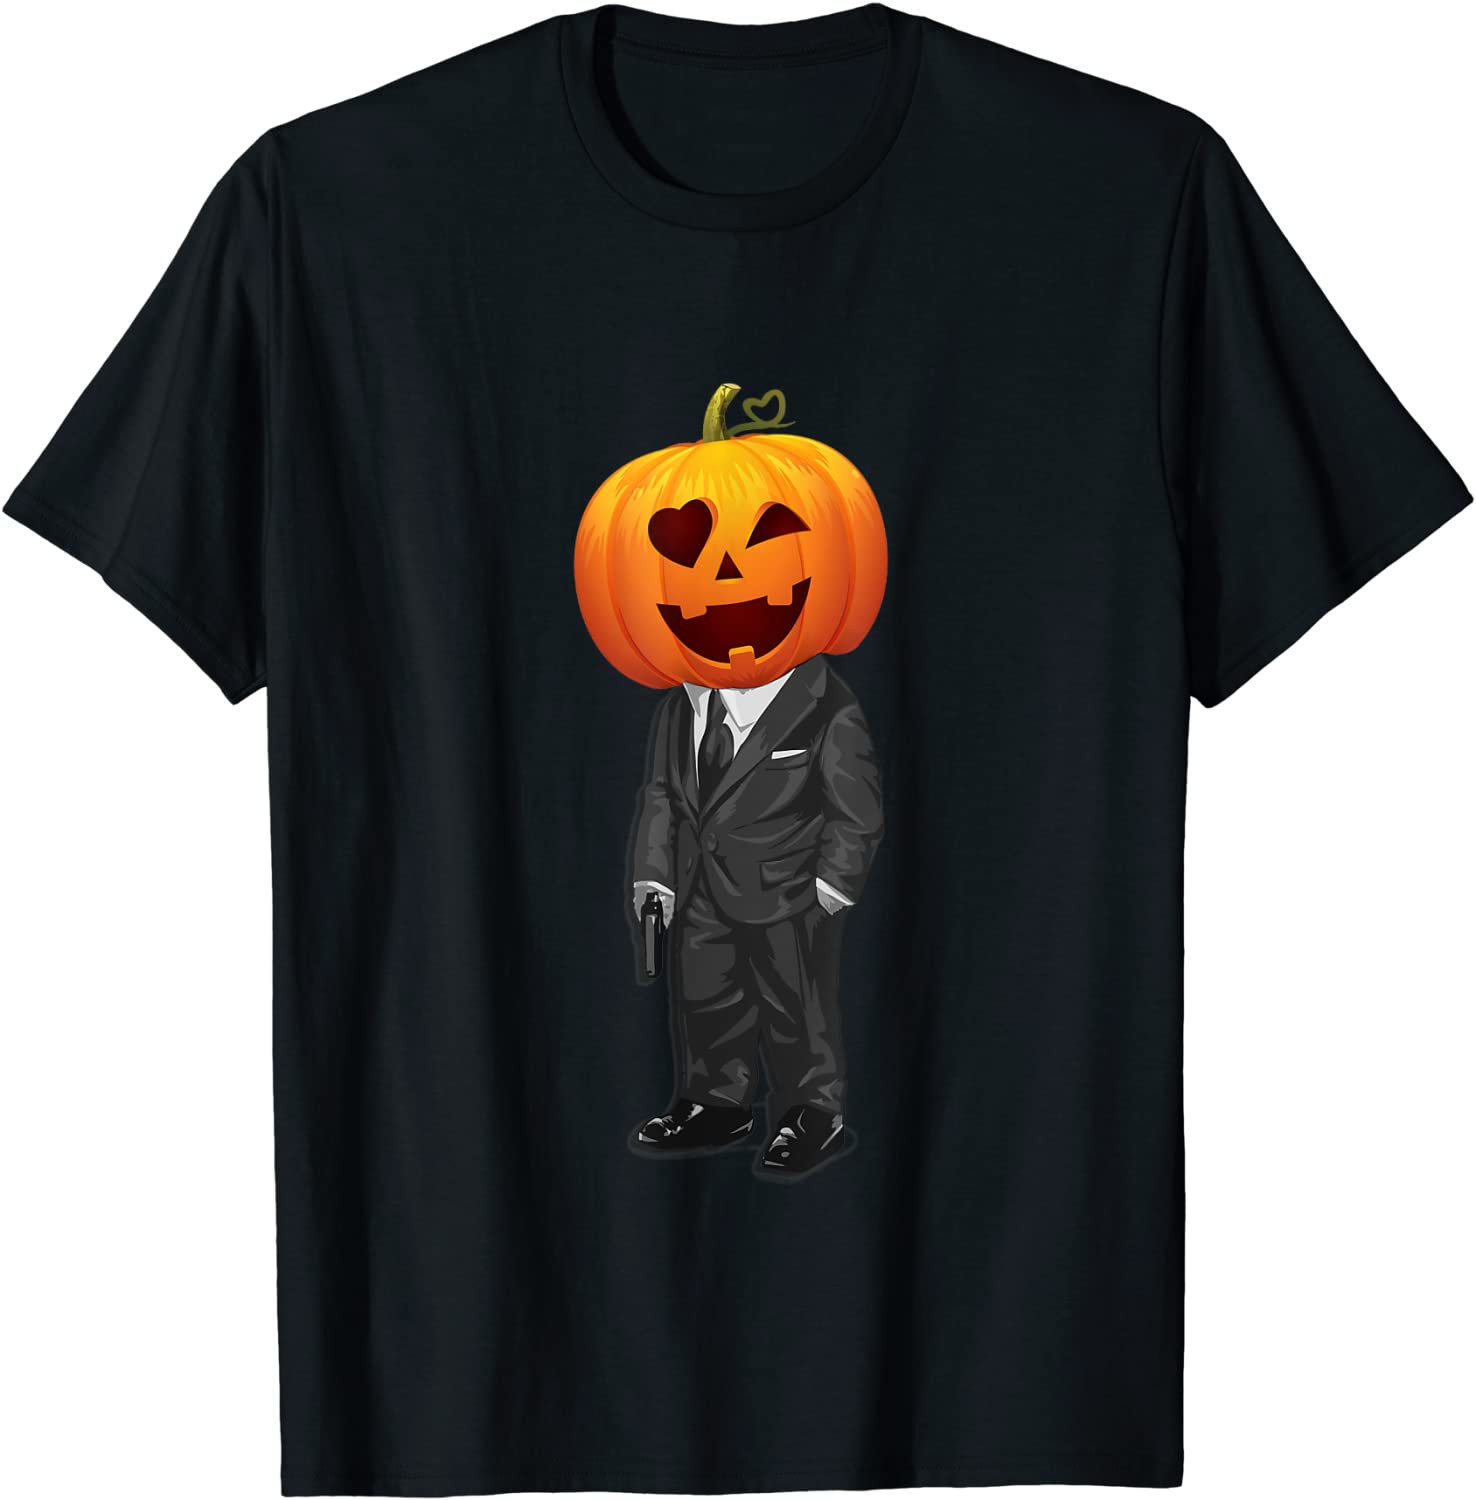 Halloween "Men In Pumpkin" , Costume Scary T-Shirt